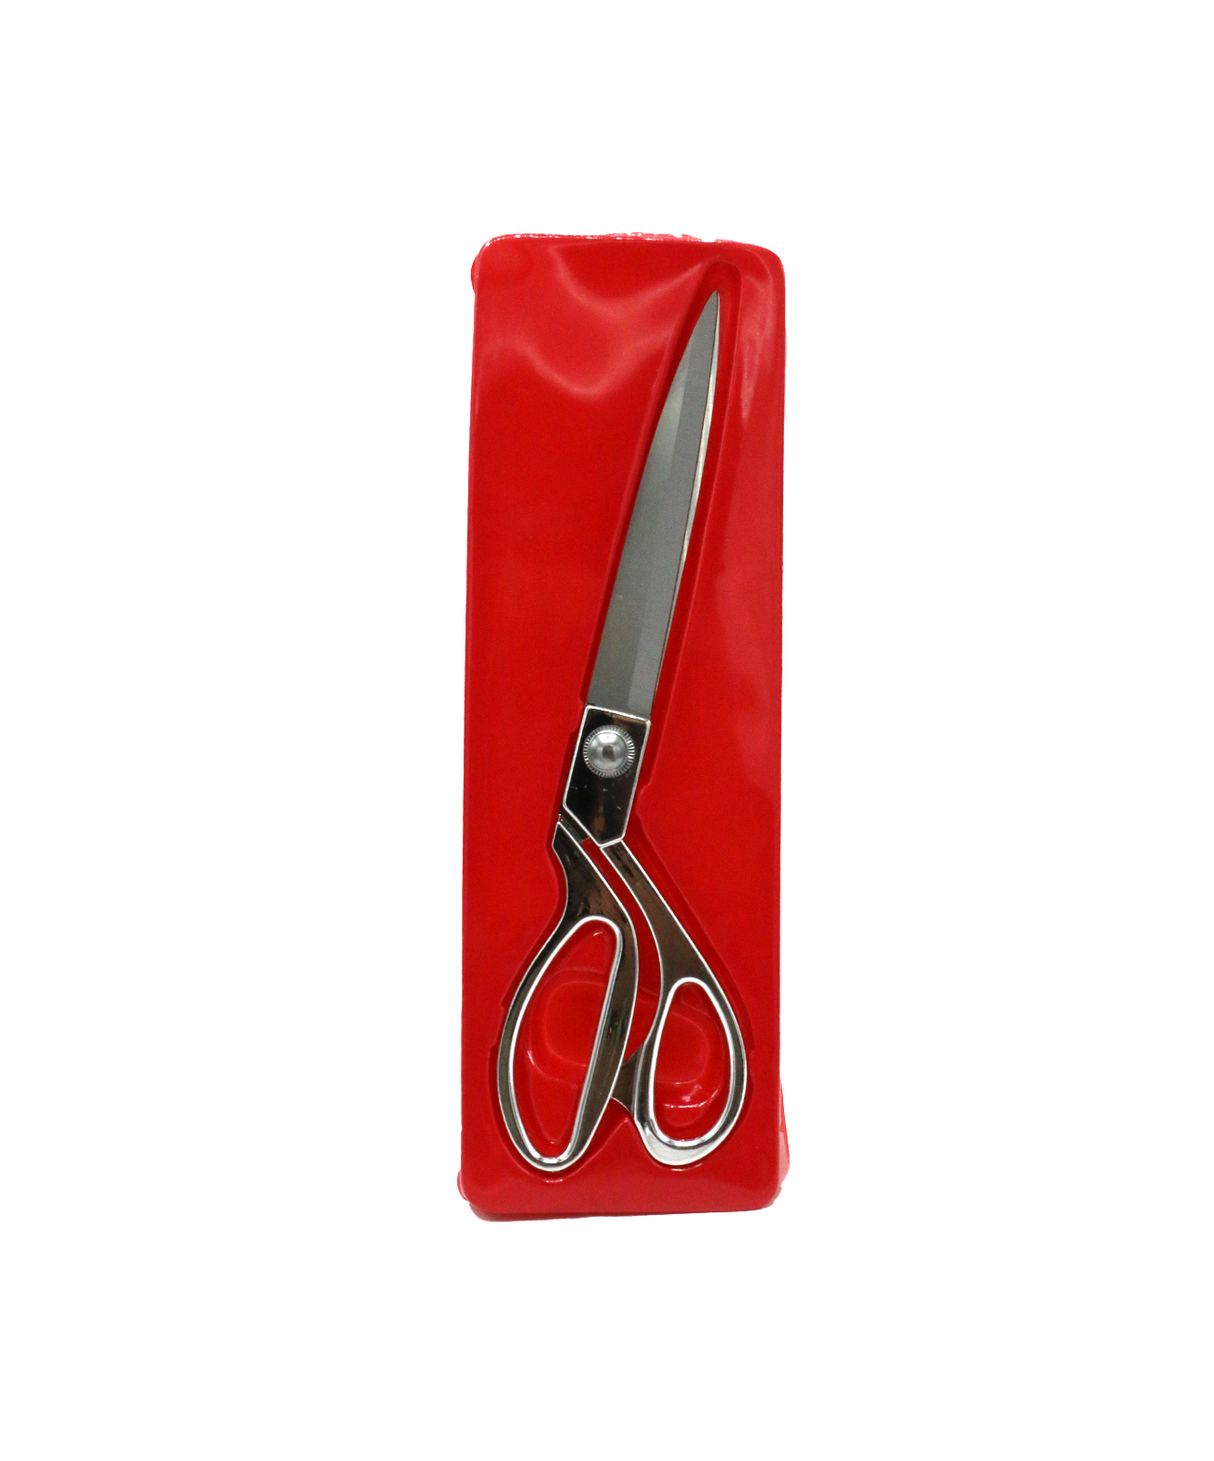 cloth scissors china 6624